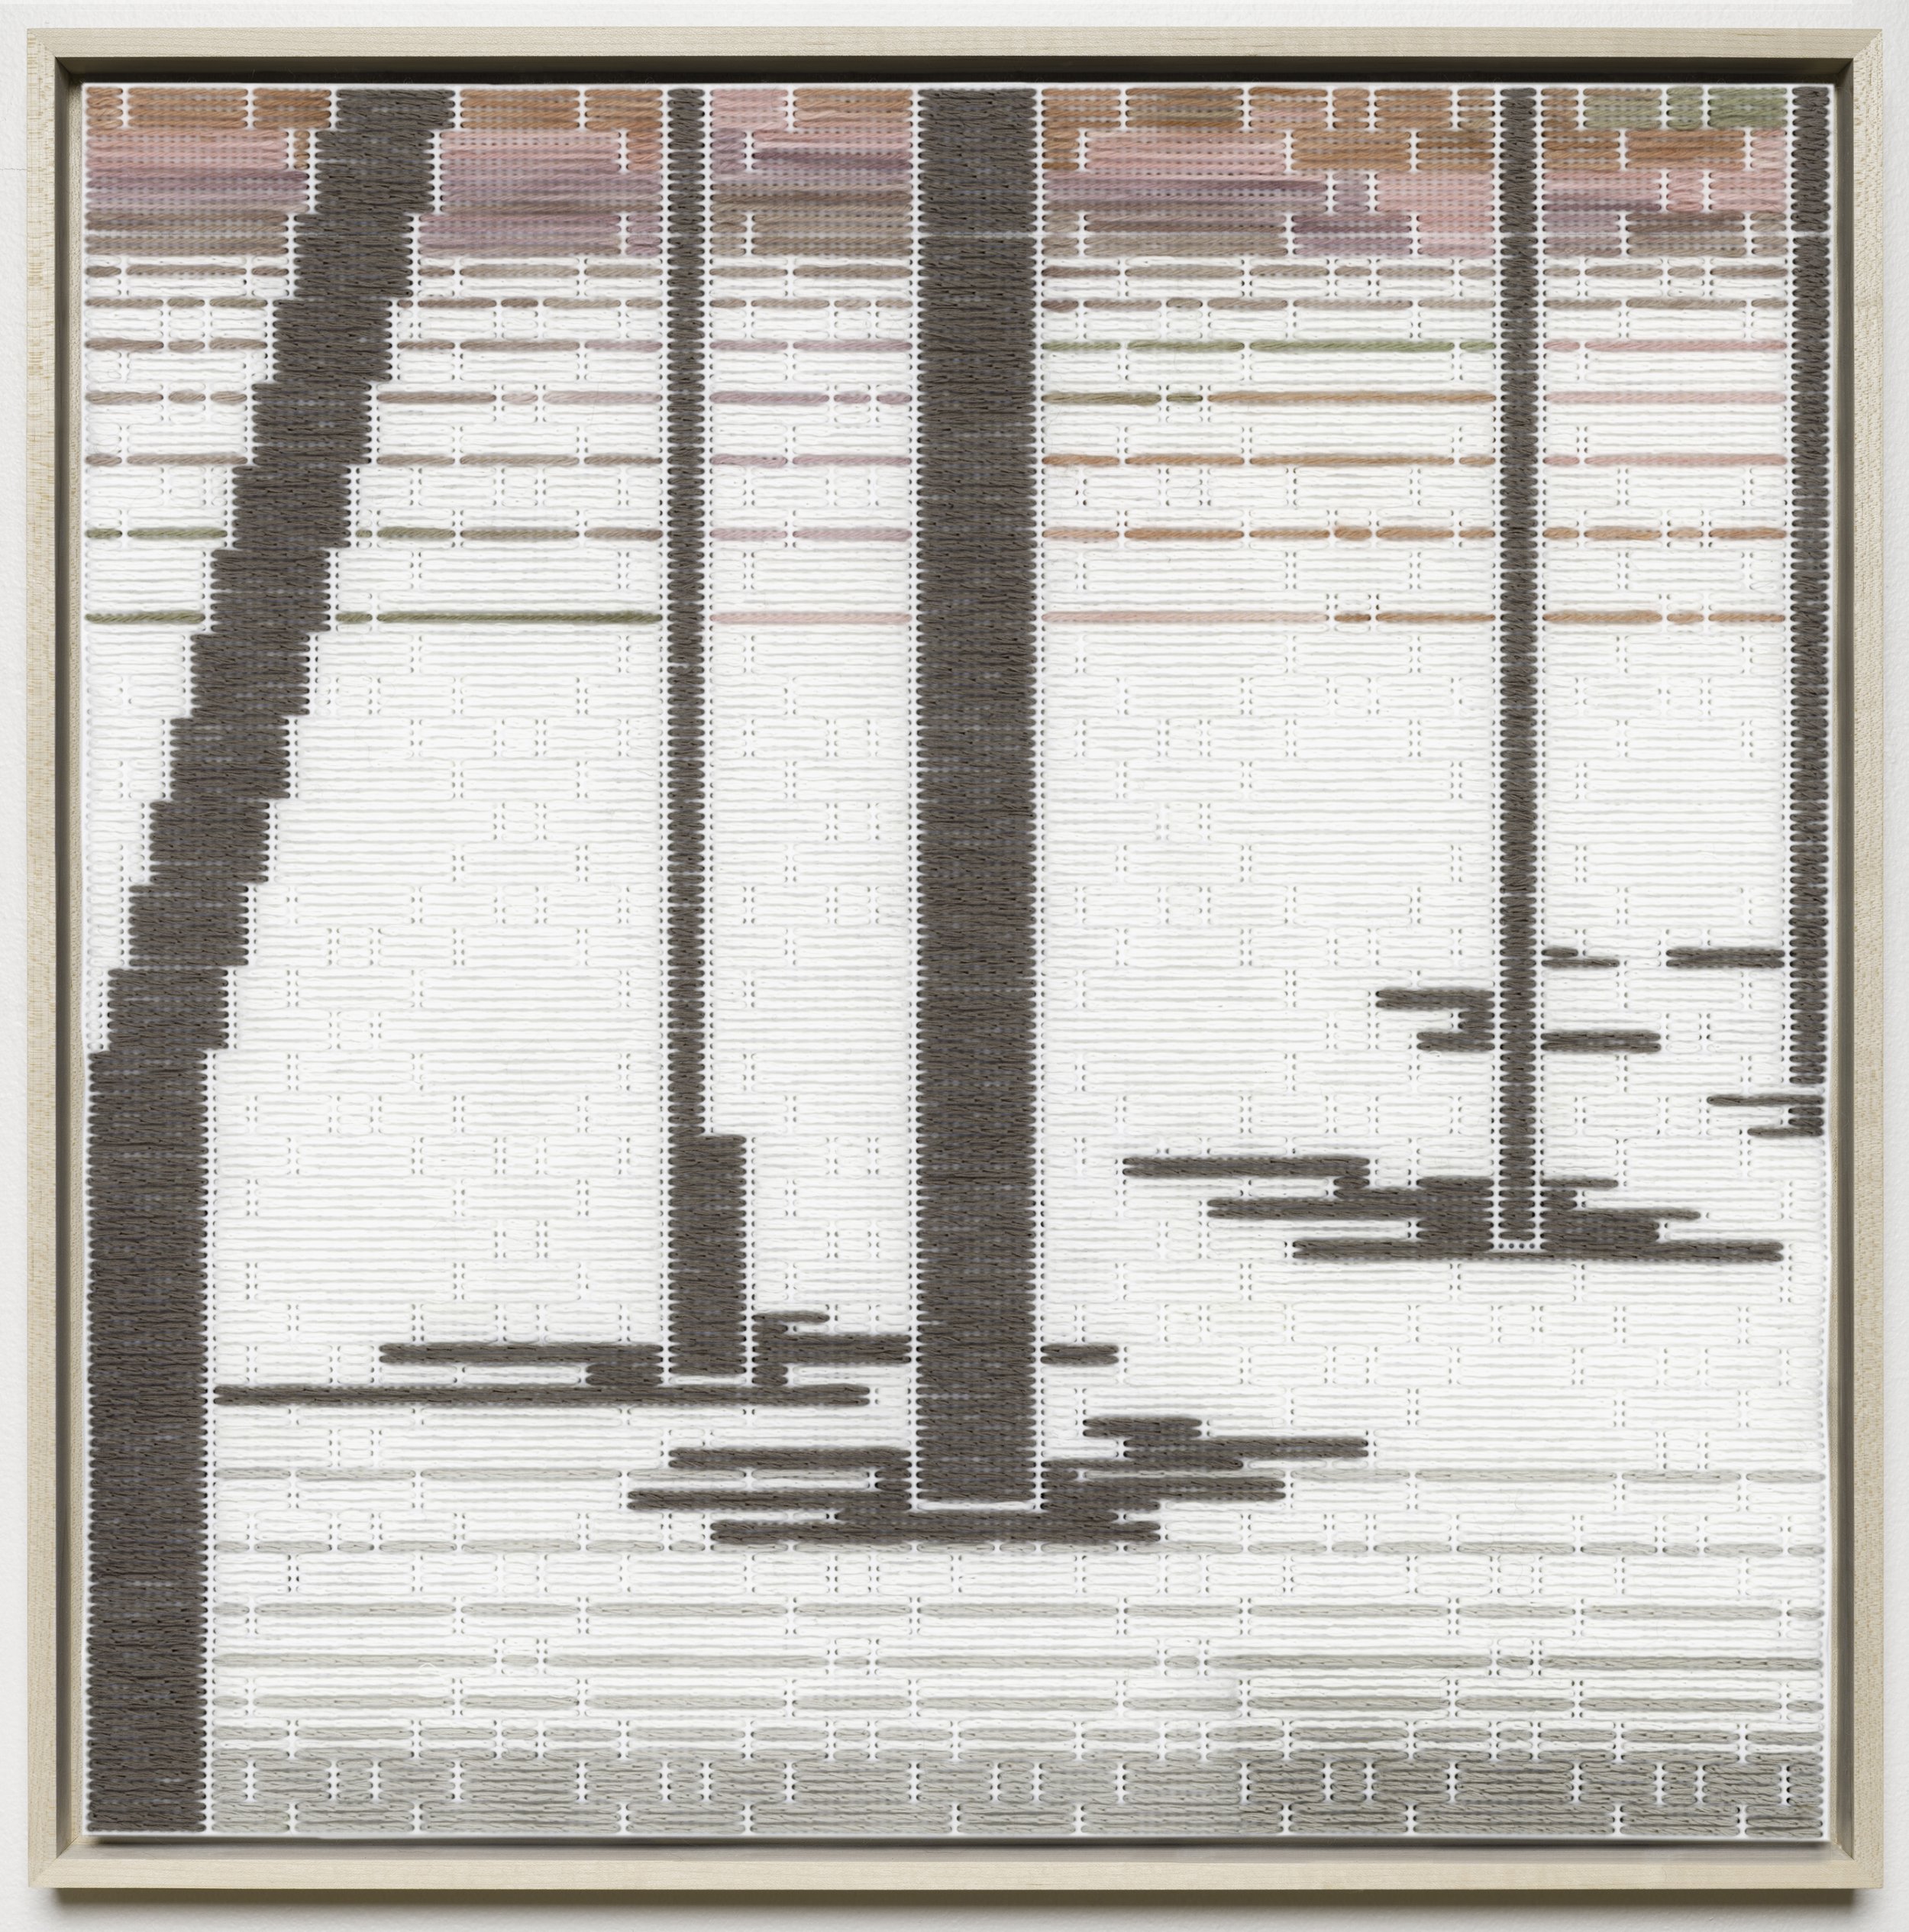  TWELVE12VIEWS 06 | 13.5 x 13.5 inches / 34.2 x 34.2 cm, Needlepoint linen, cotton on canvas mesh, 2020 